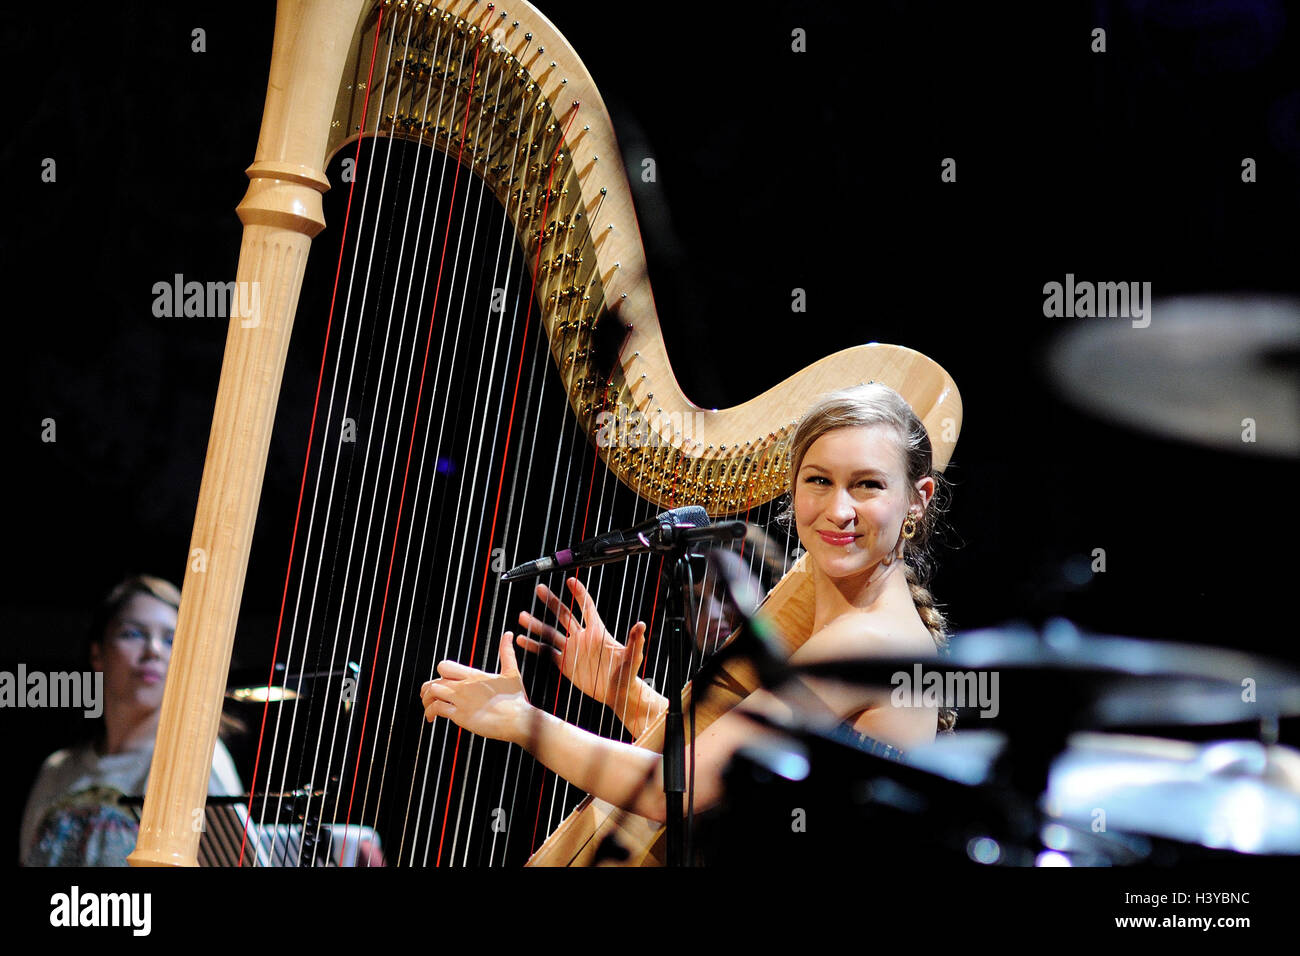 BARCELONA - JAN 20: Joanna Newsom, harp player and singer, performs at Palau de la Musica Catalana. Stock Photo